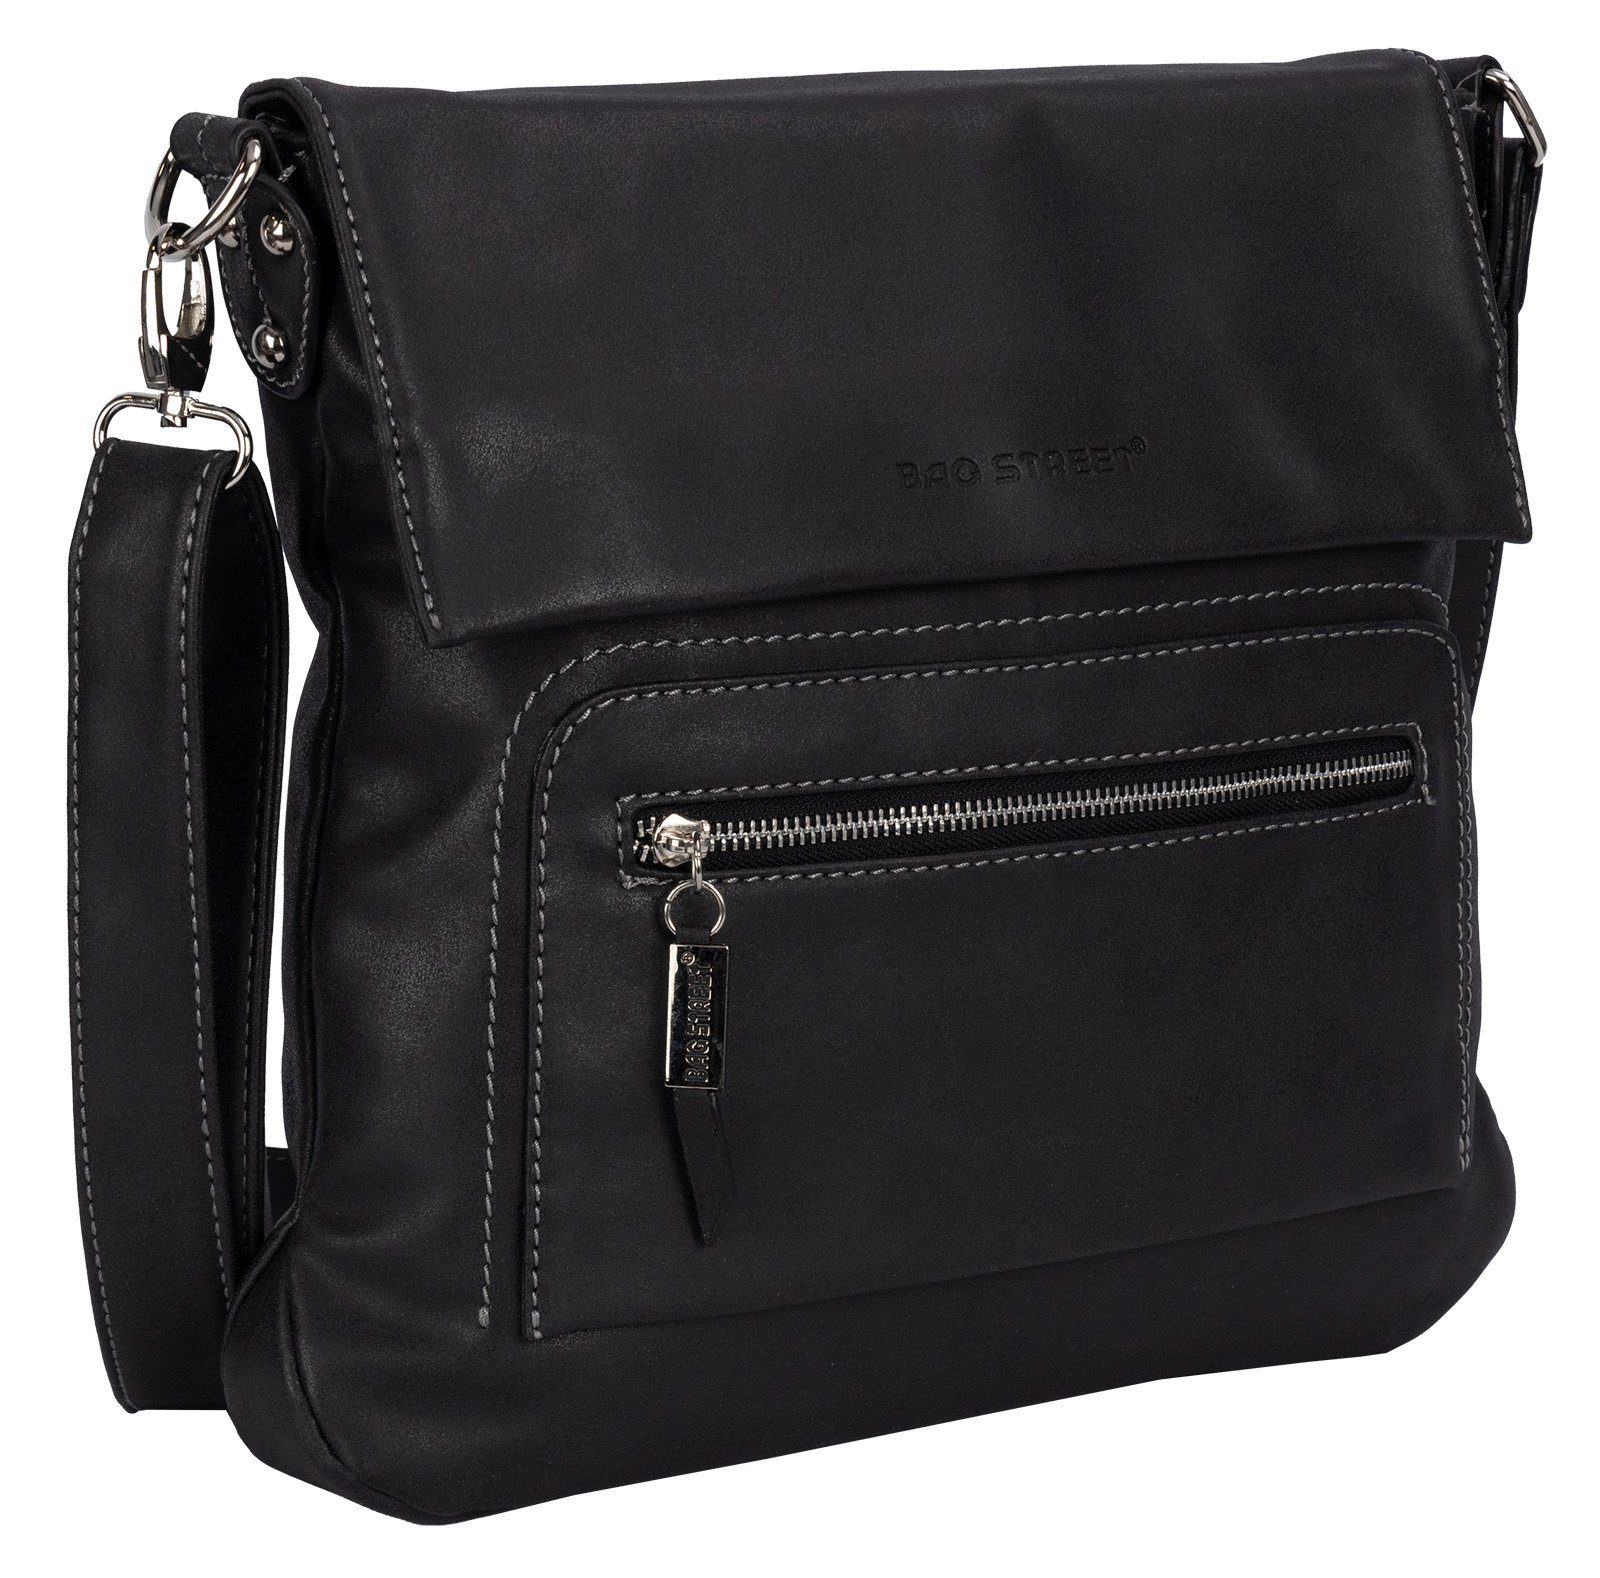 BAG STREET Schlüsseltasche Bag Street Damentasche Umhängetasche Handtasche Schultertasche T0103, als Schultertasche, Umhängetasche tragbar SCHWARZ